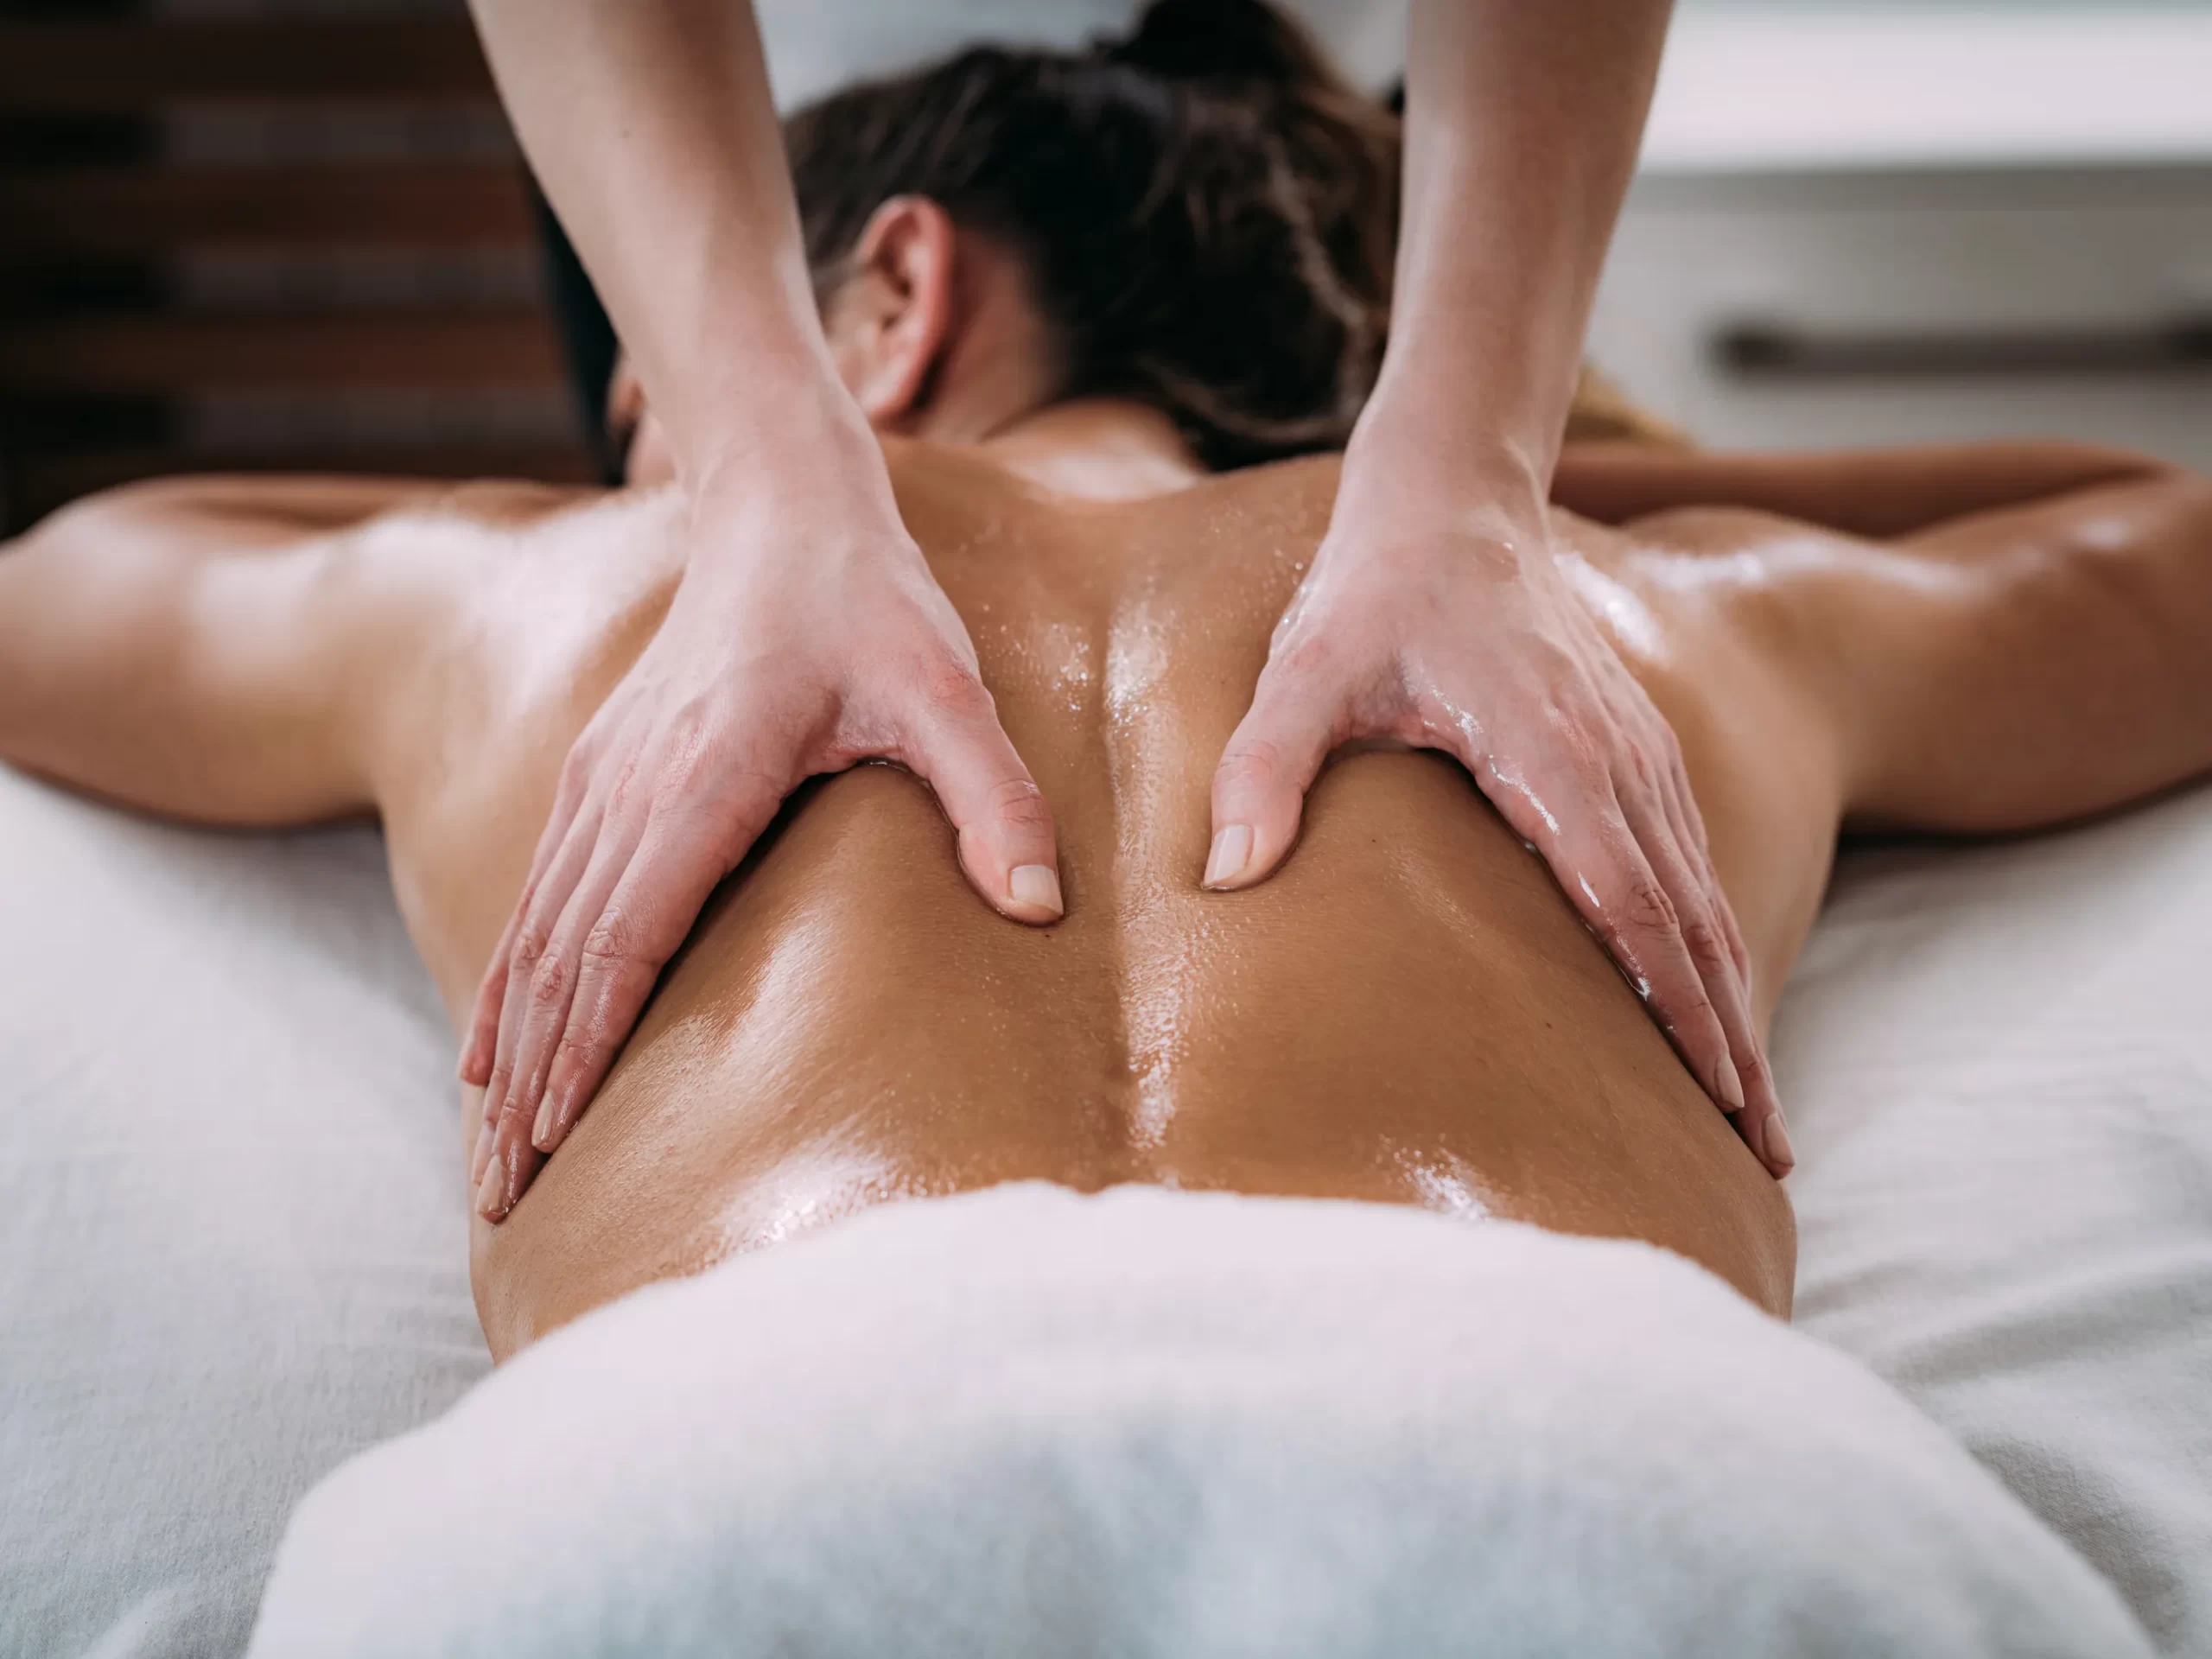 Enjoy All Type Of Massage At Massage Therapist In Lexington, KY